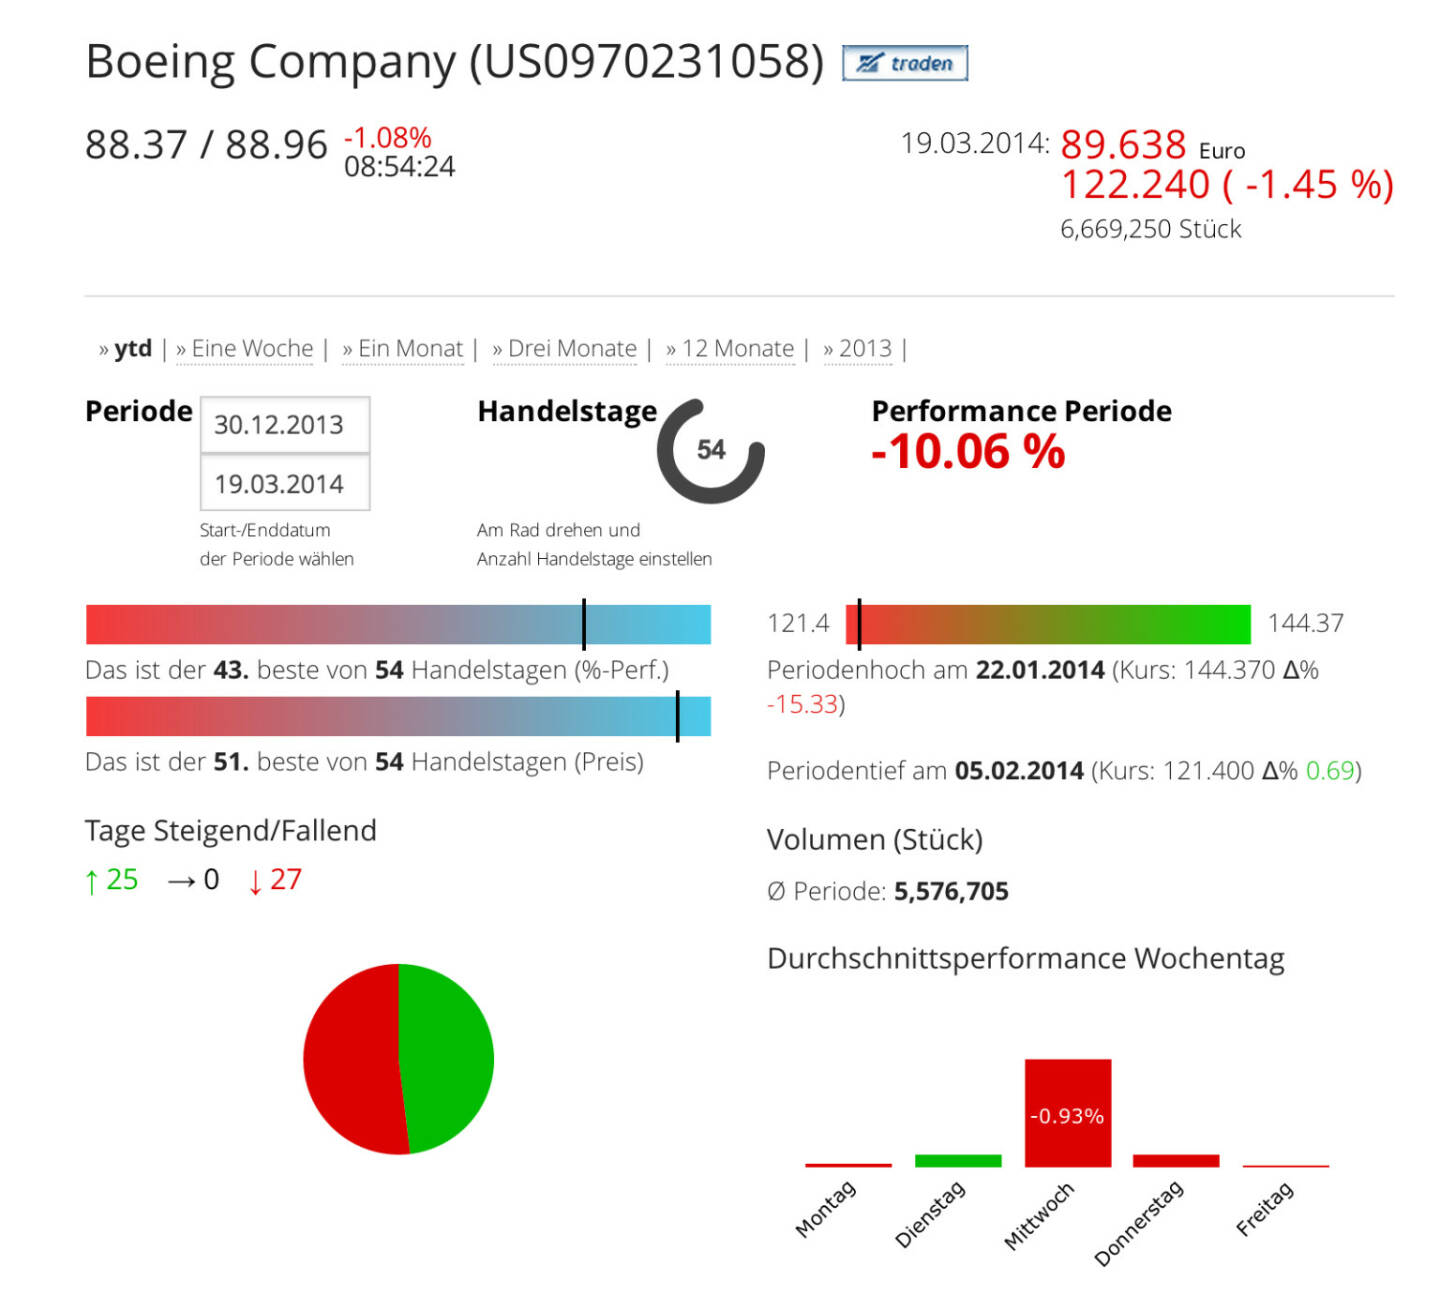 Die Boeing Company im Börse Social Network, http://boerse-social.com/launch/aktie/boeing_company